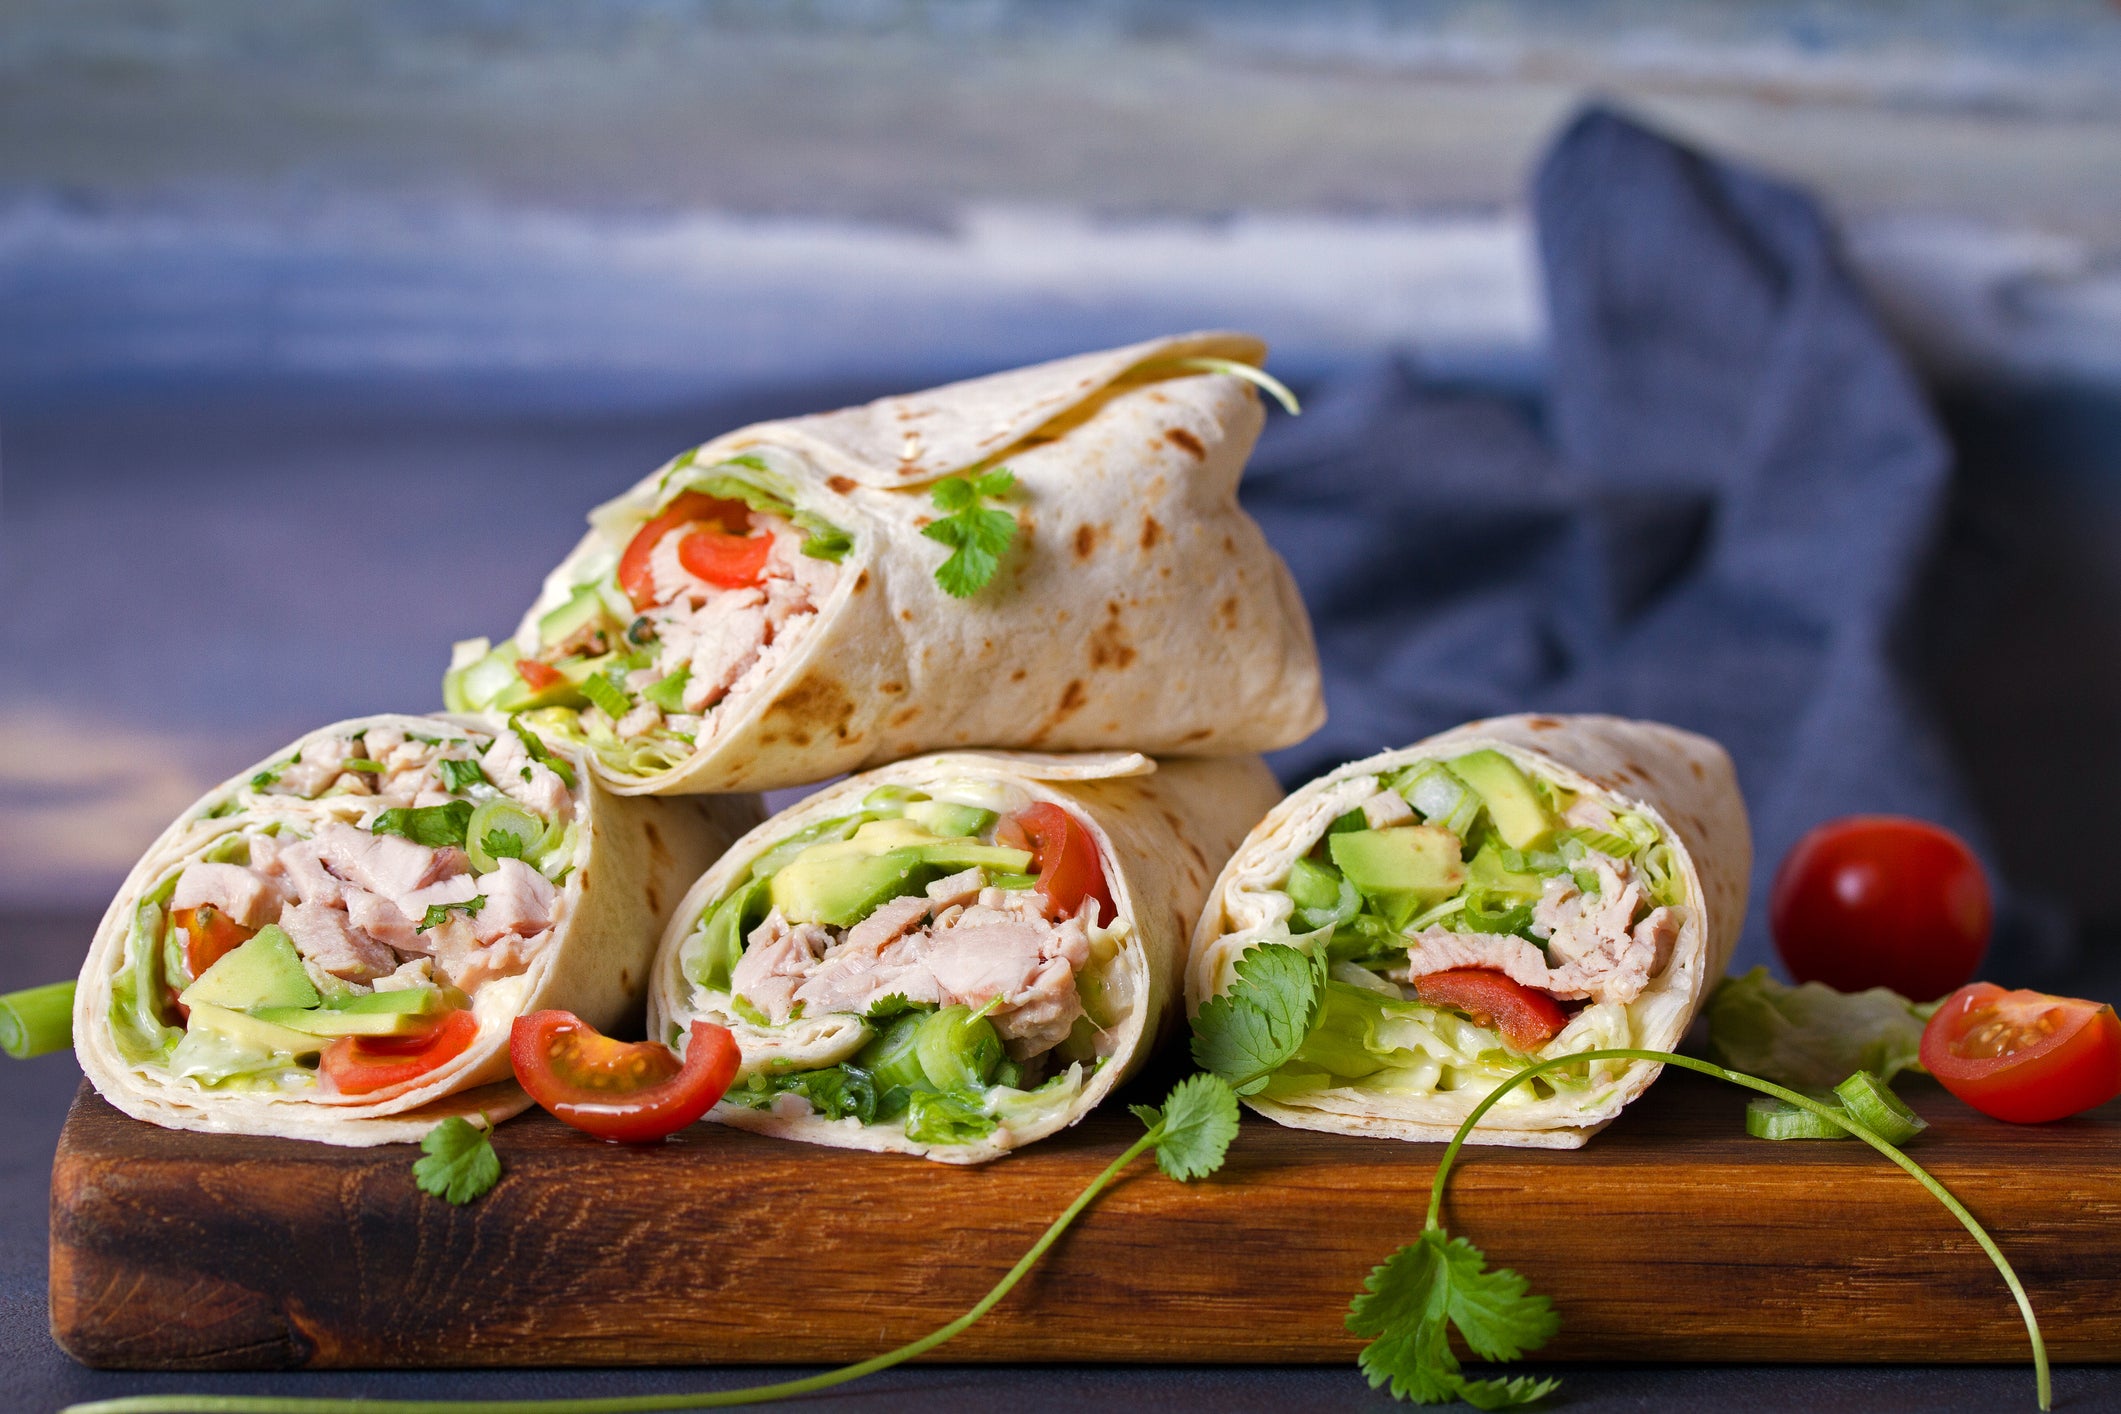 Healthy Lunch - Turkey Avocado Wrap